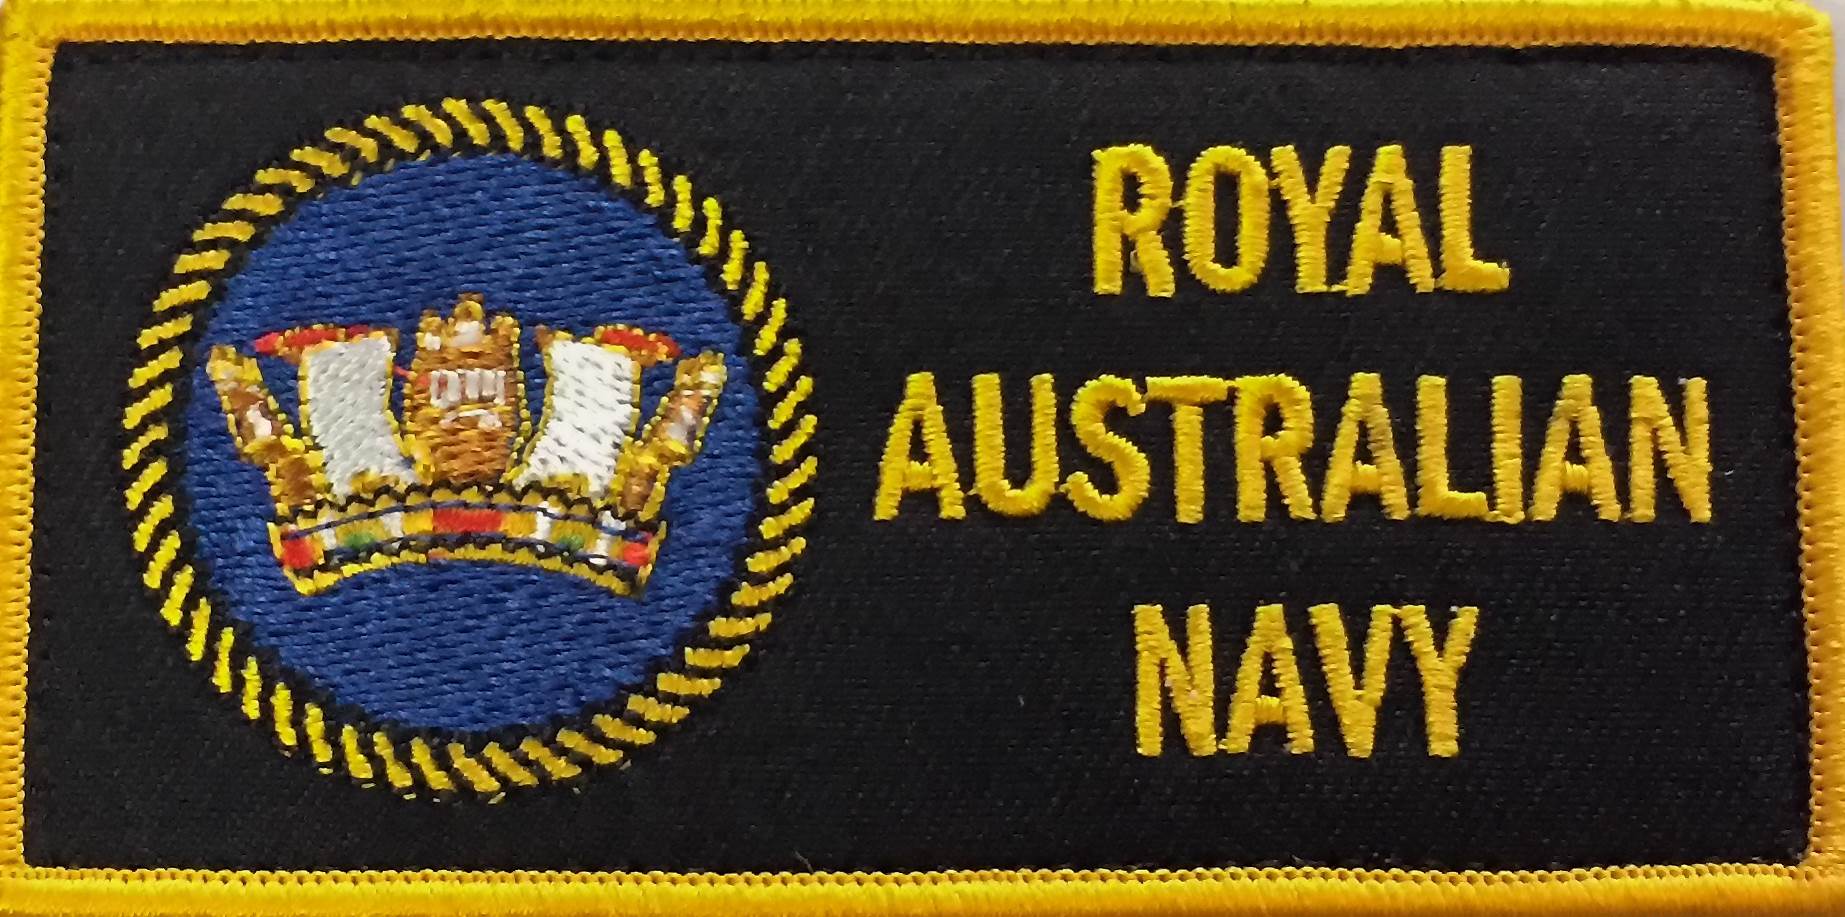 Royal Australian Navy DPNU Uniform Patch Royal Australian Navy DPNU Uniform Patch by johntorcasio